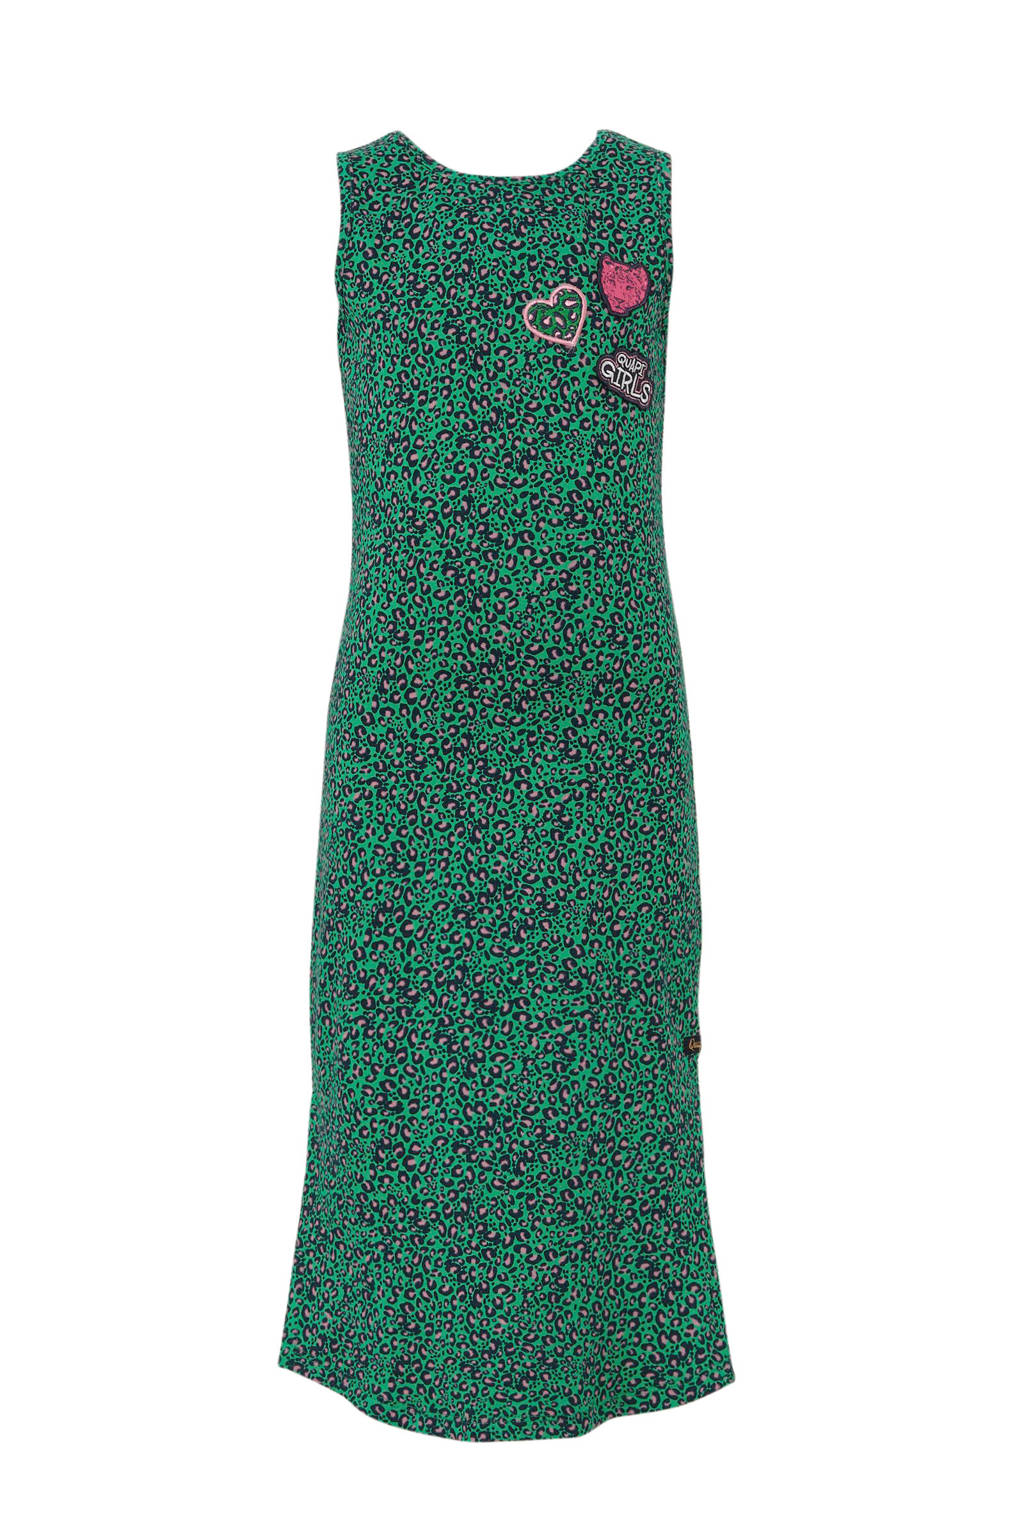 Betere Quapi maxi jurk Alley met panterprint groen/zwart | wehkamp VG-74